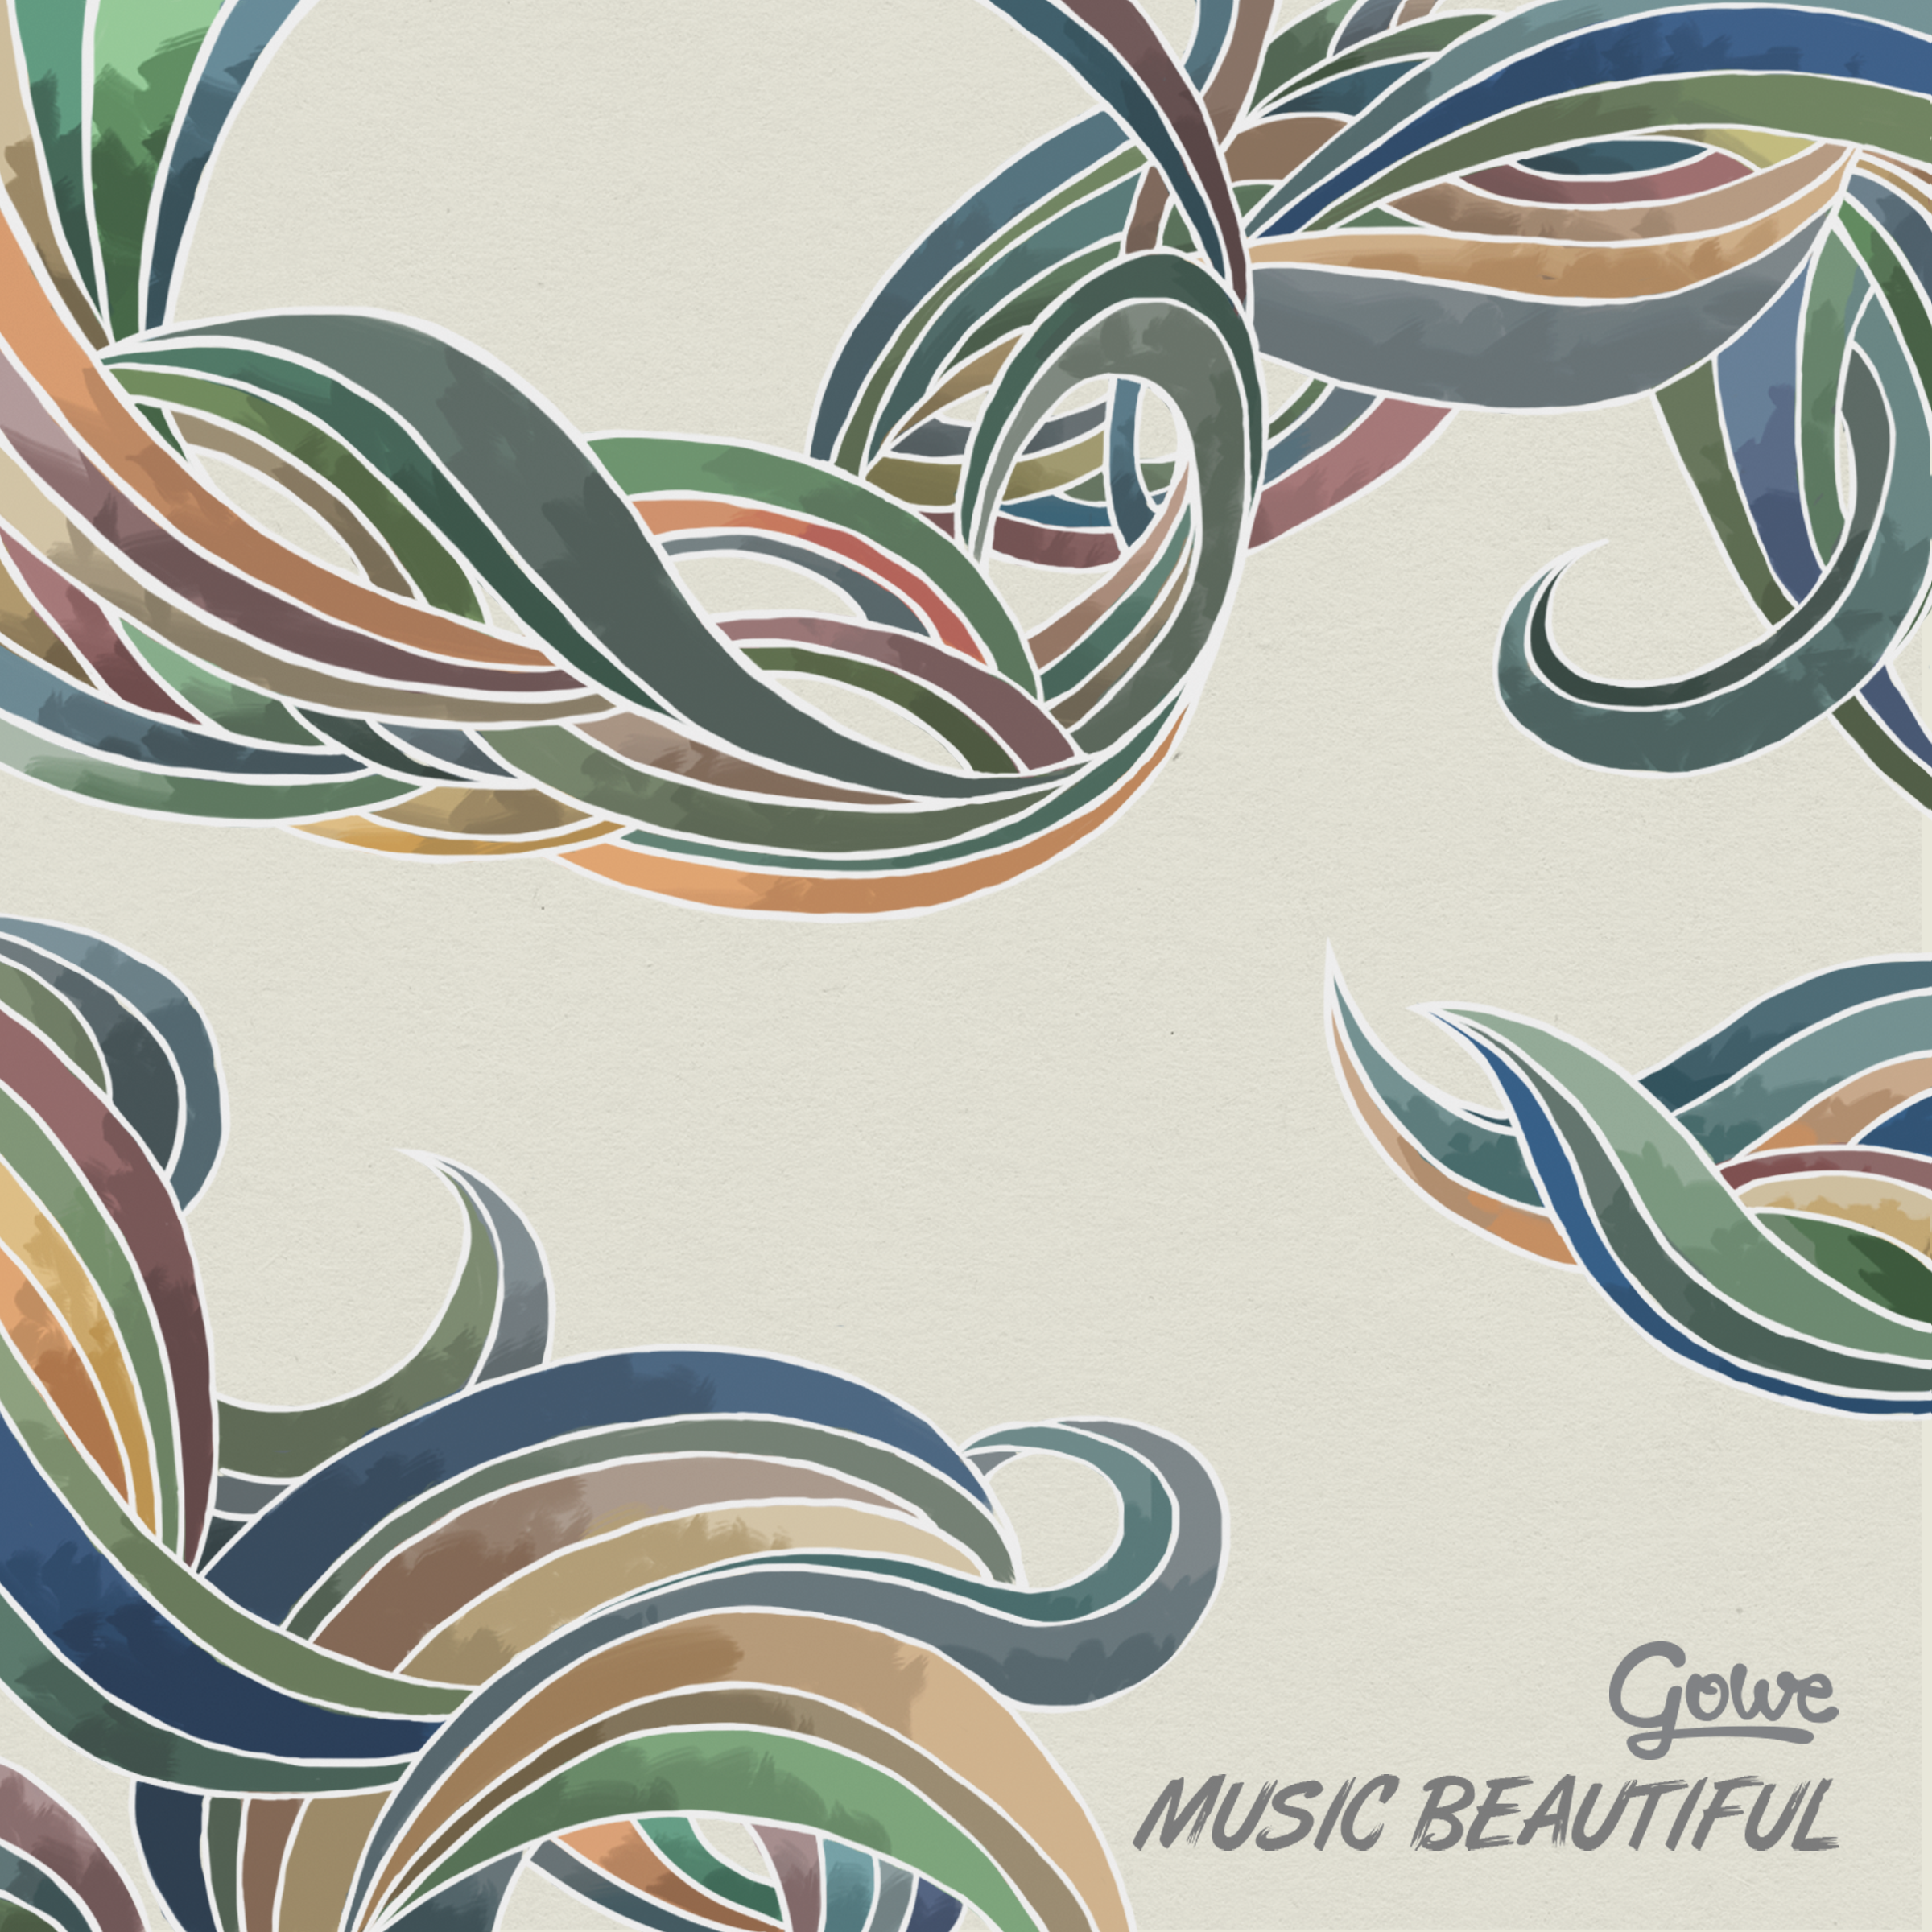 Gowe - Music Beautiful